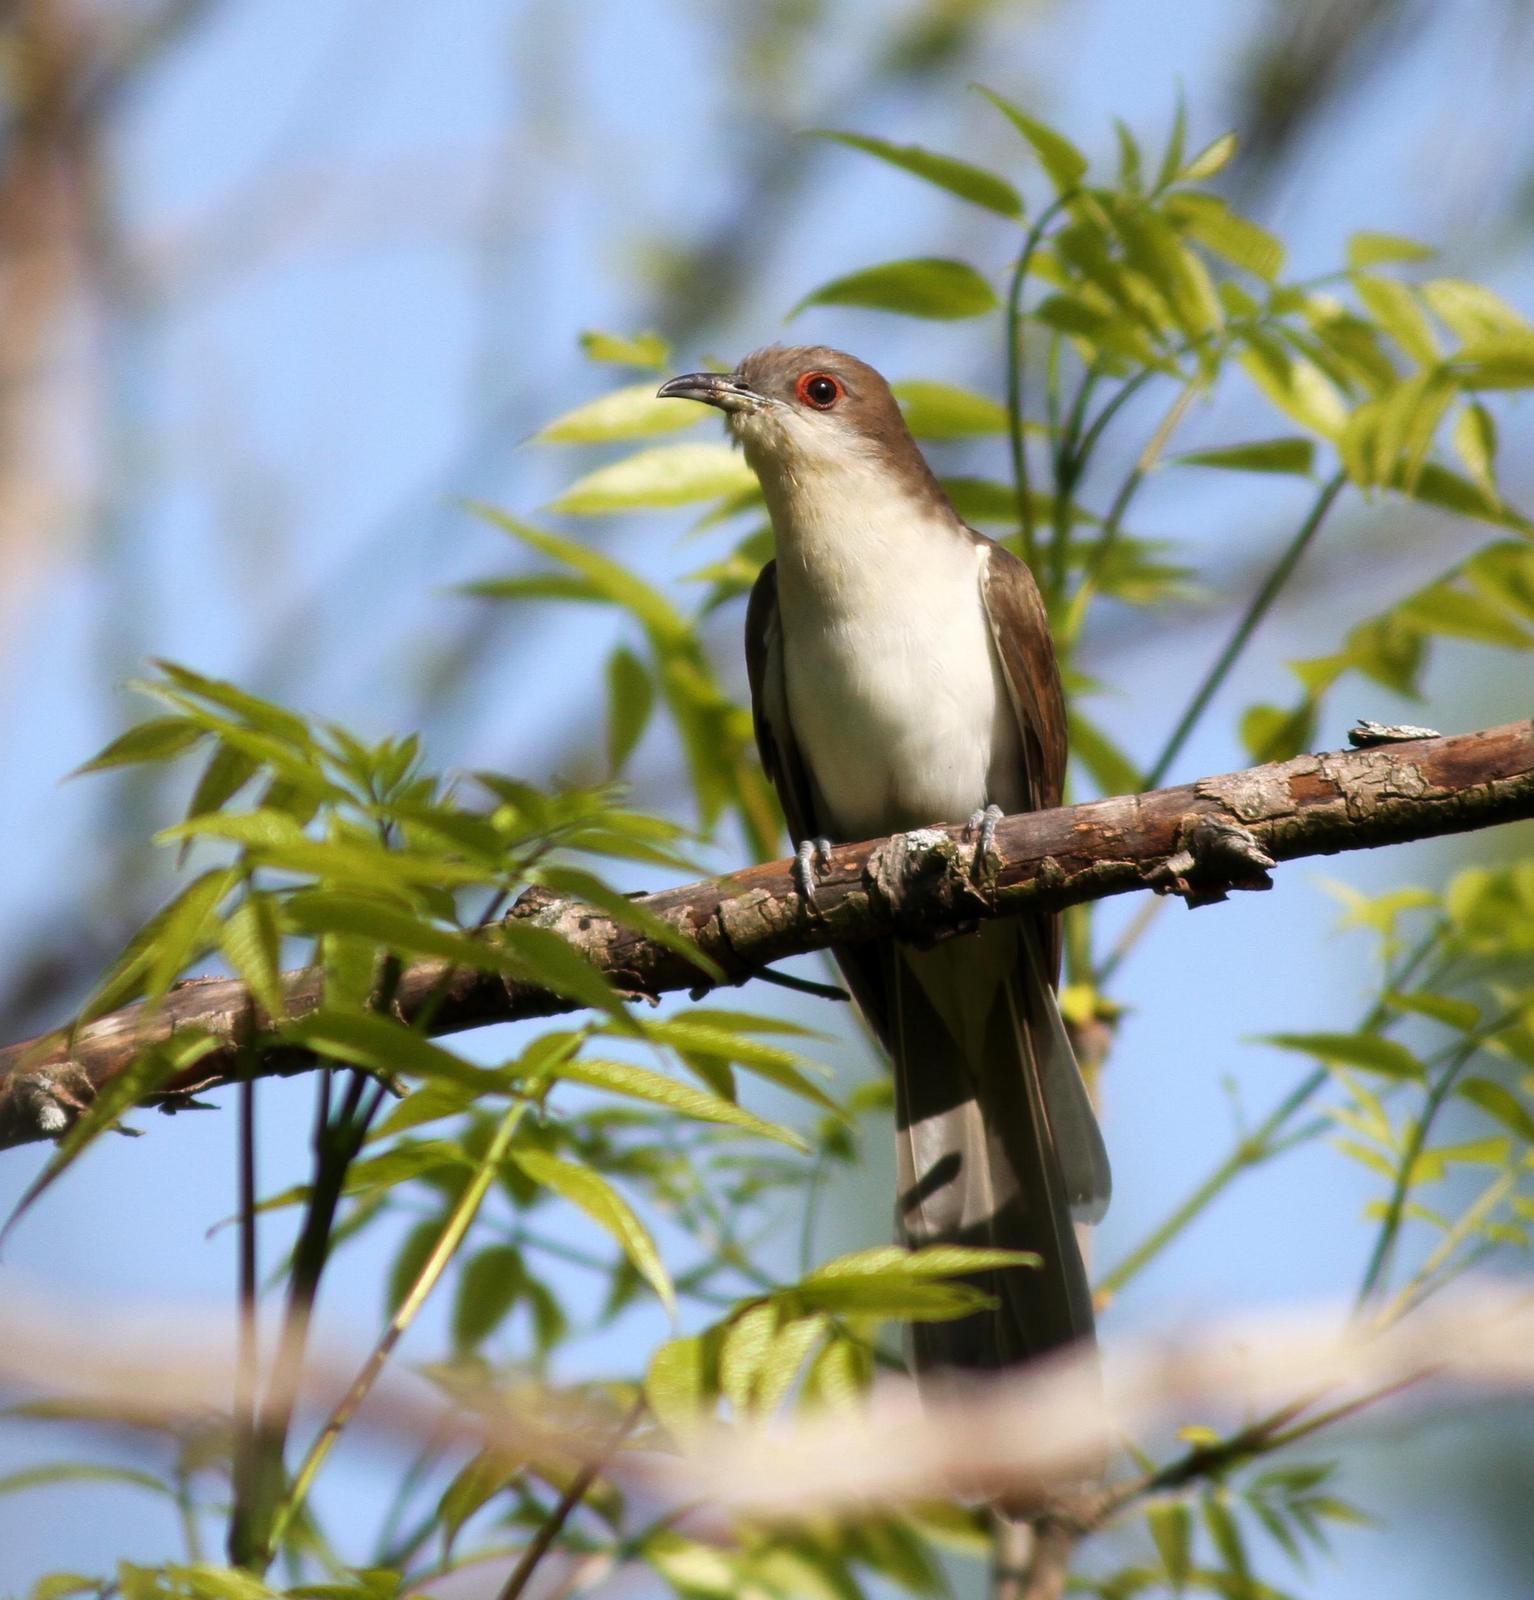 Black-billed Cuckoo Photo by Demayne Murphy